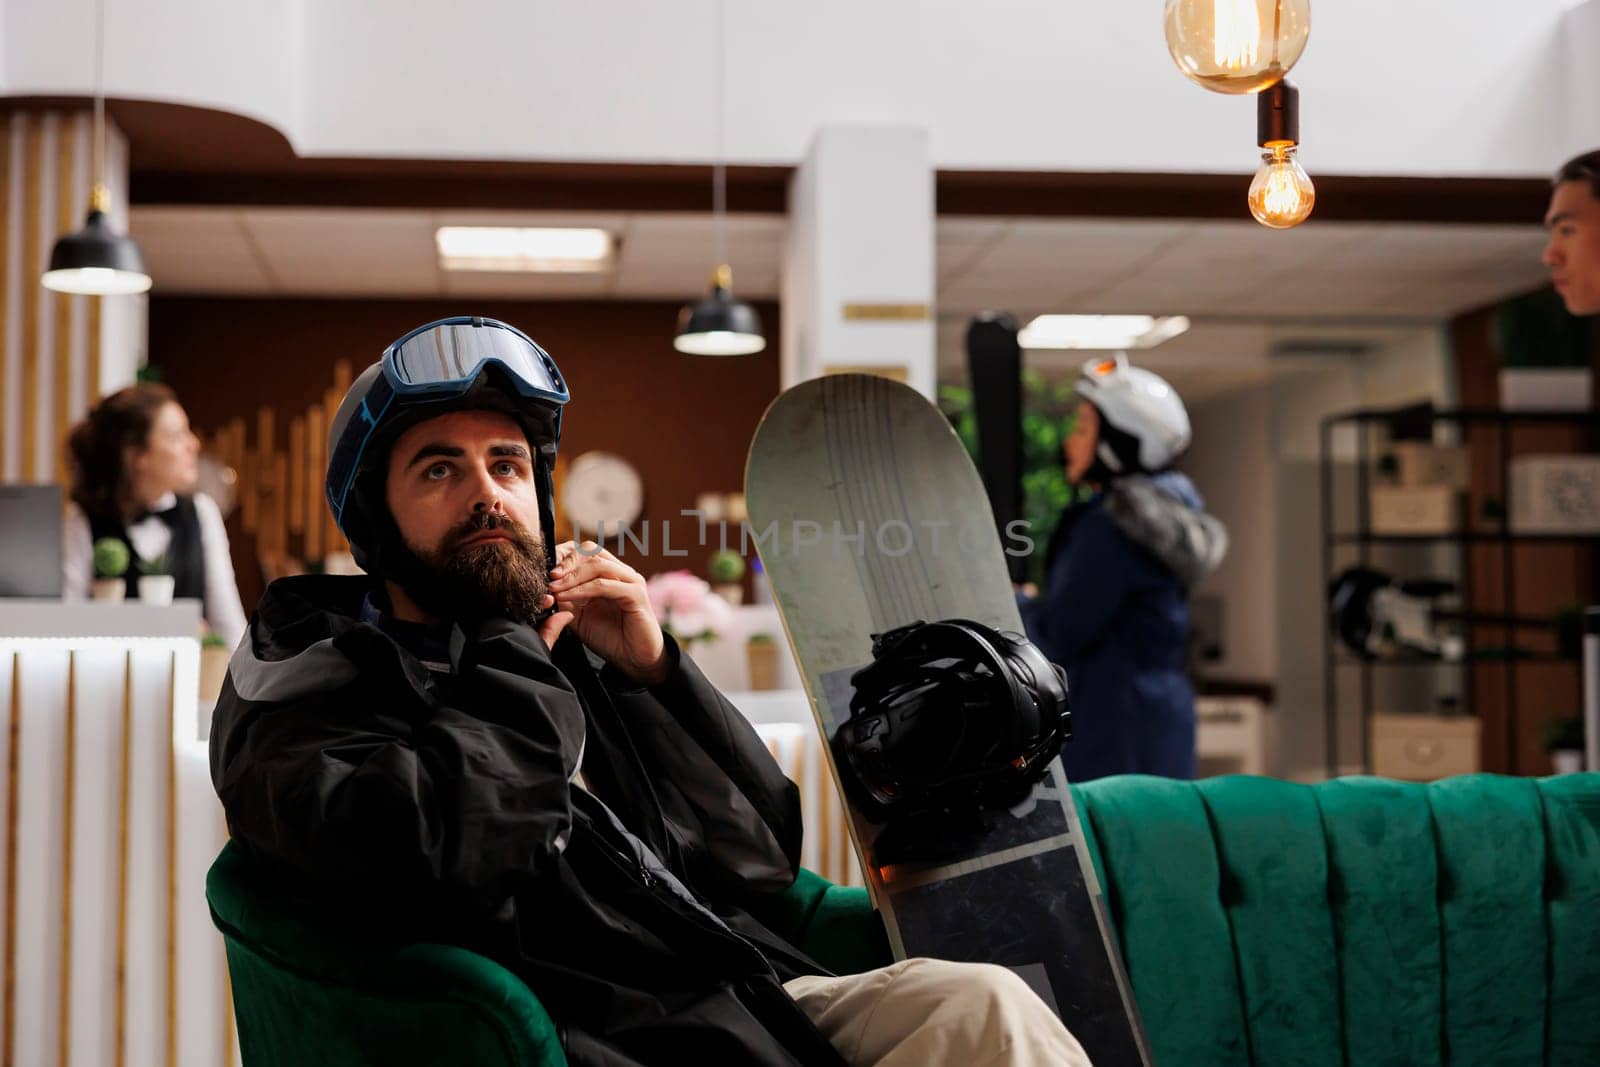 Male tourist adjusts ski helmet in lobby by DCStudio